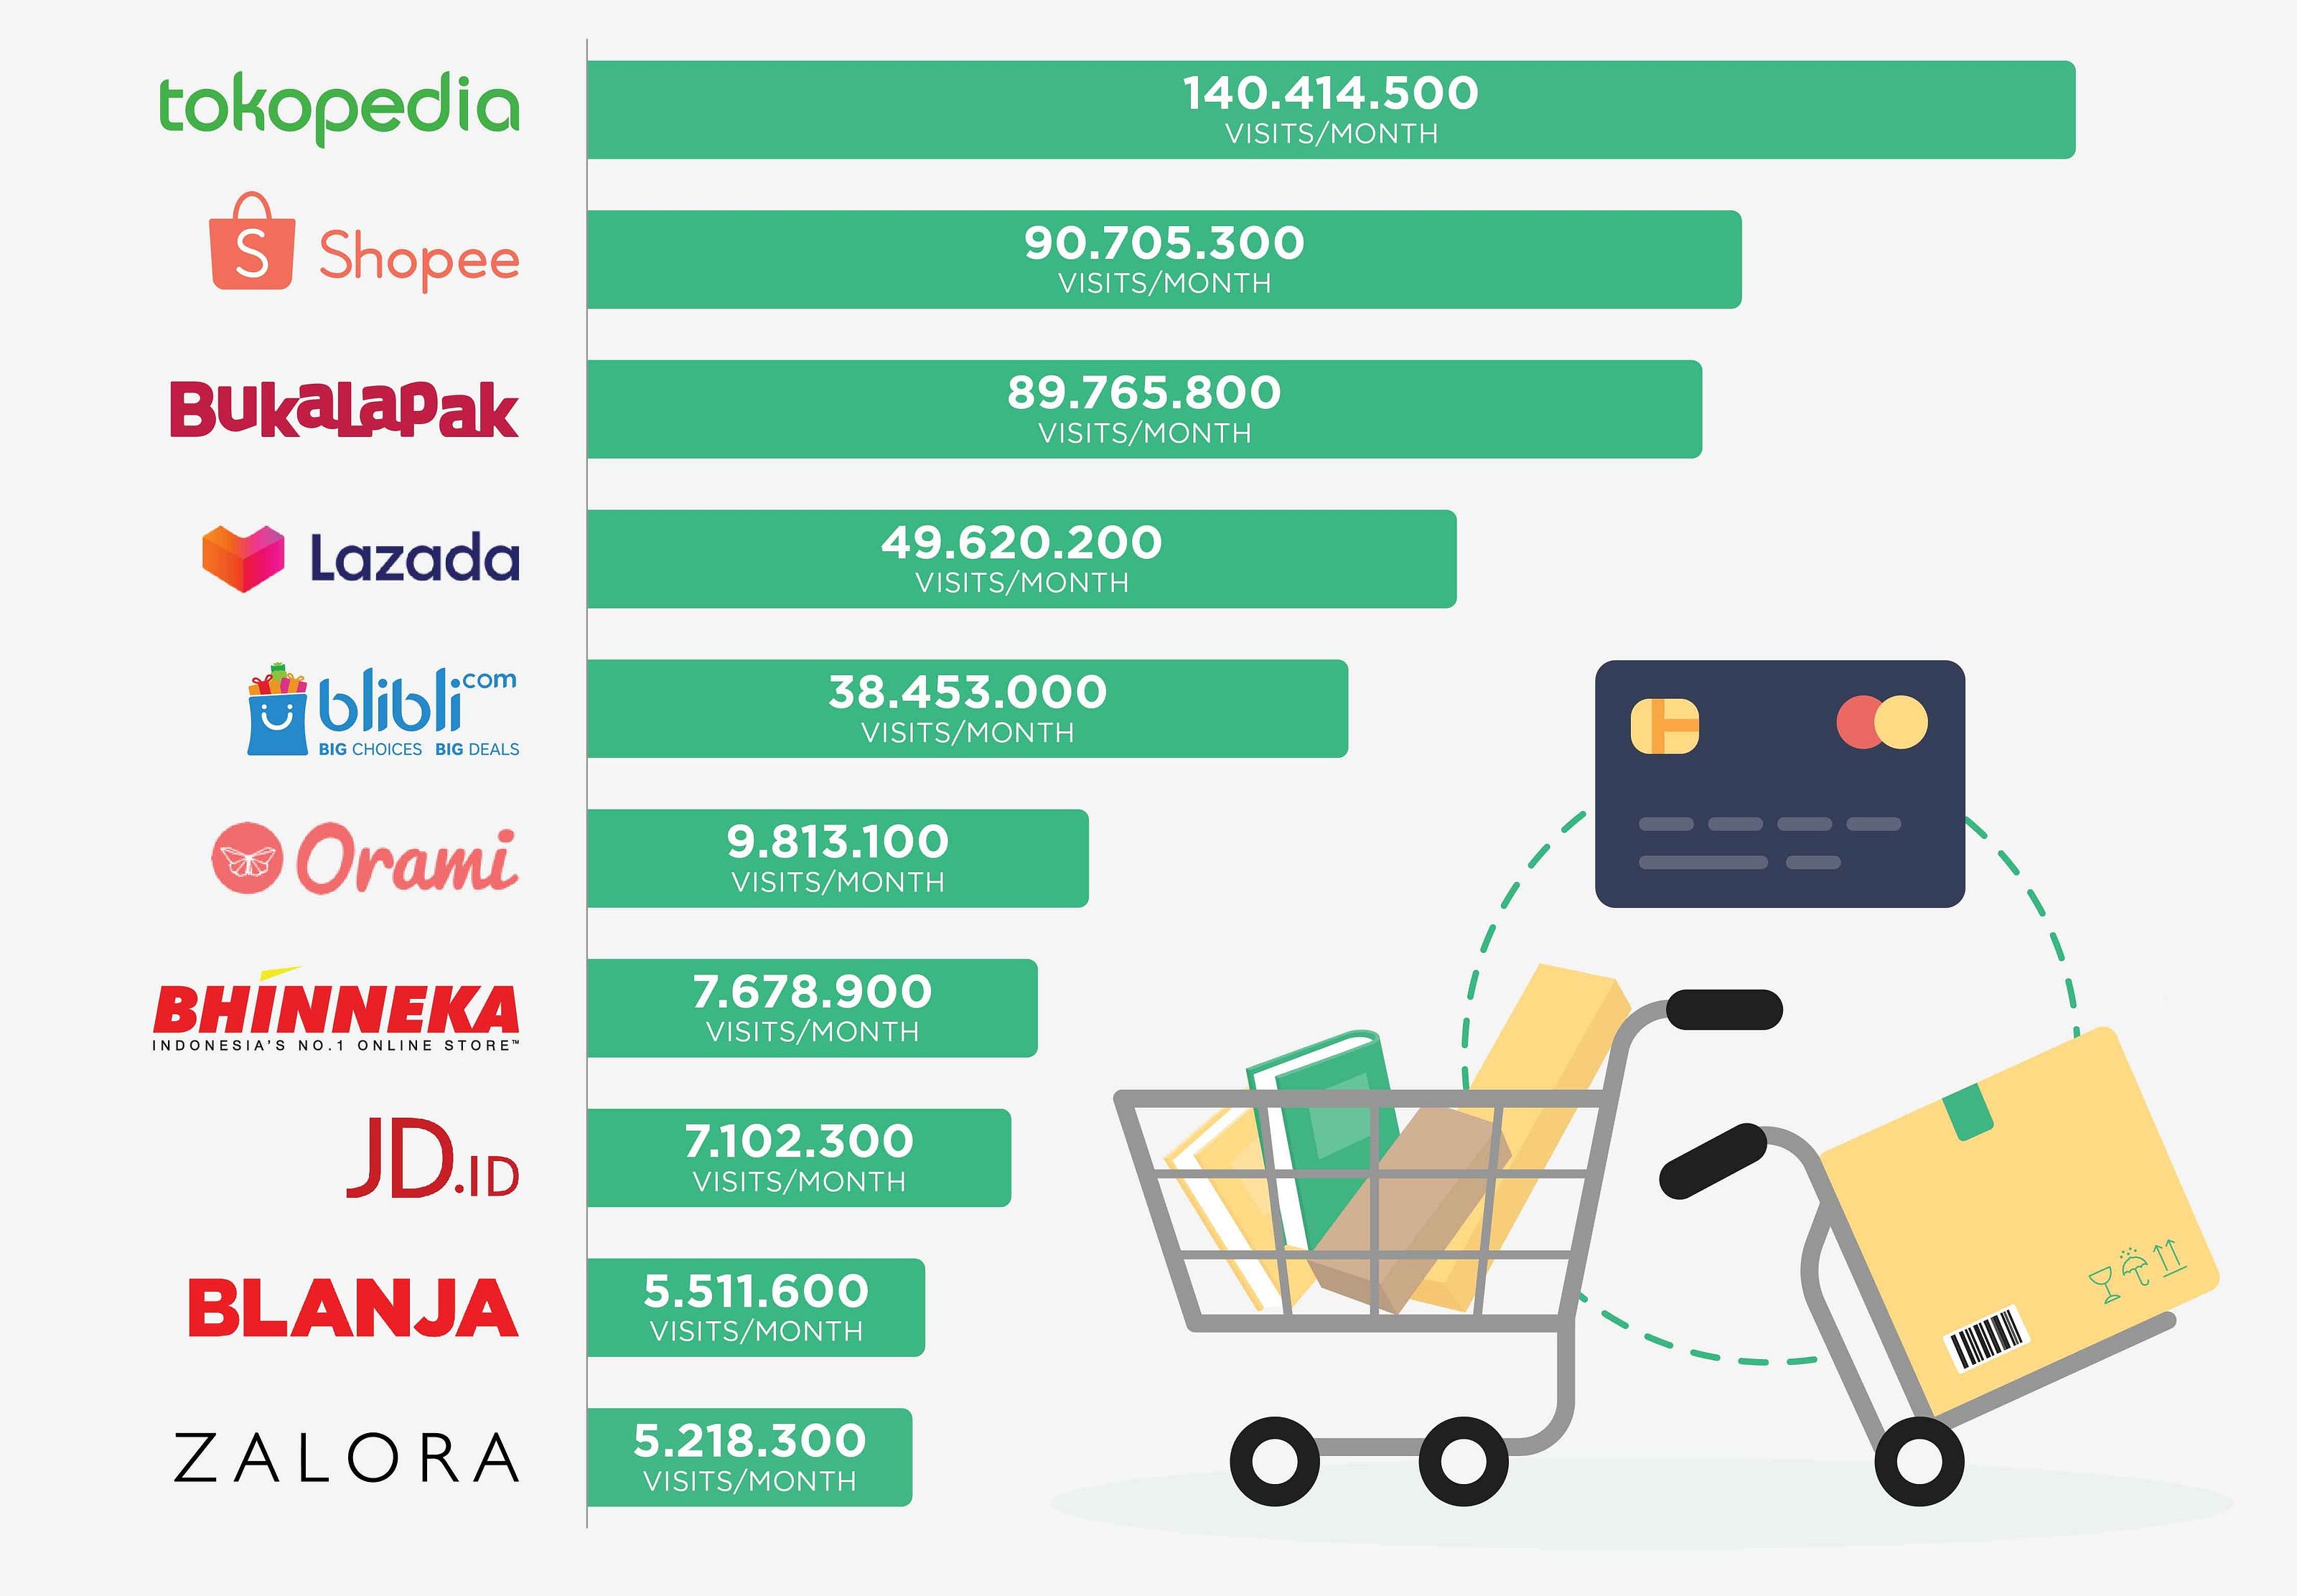 most popular ecommerce platform